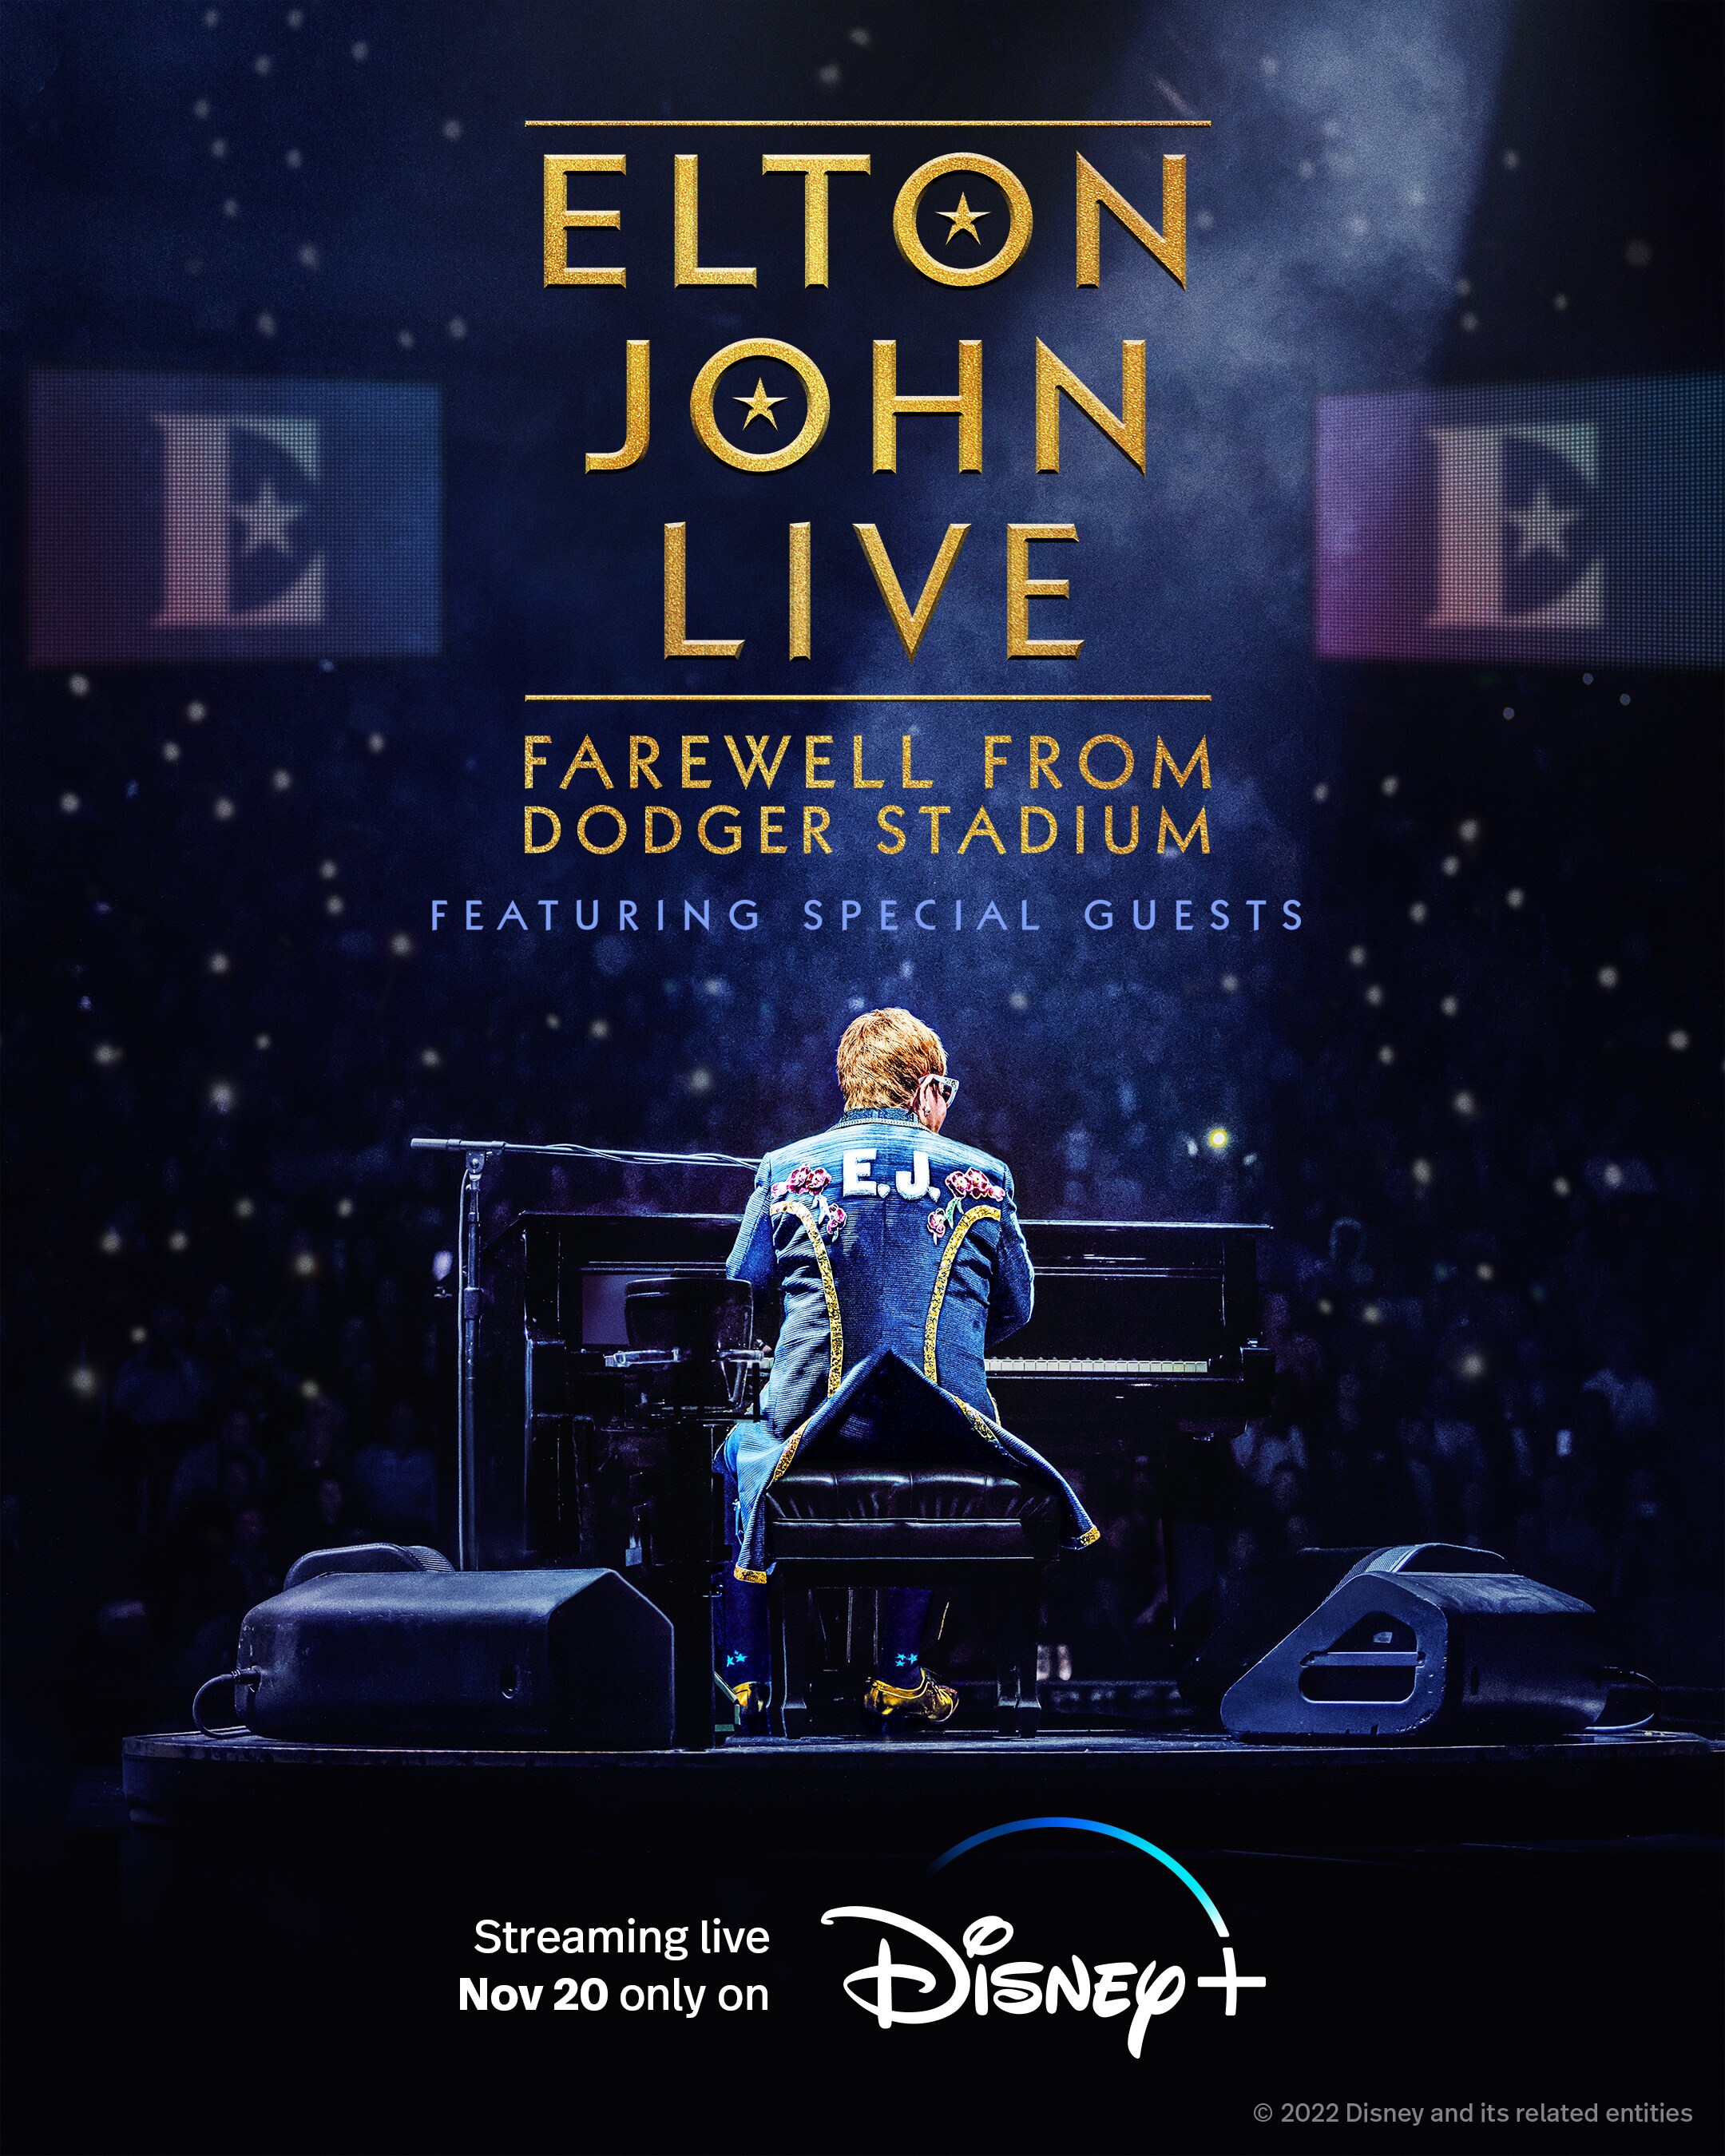 Elton John rocks Dodger Stadium in first of 3 farewell shows